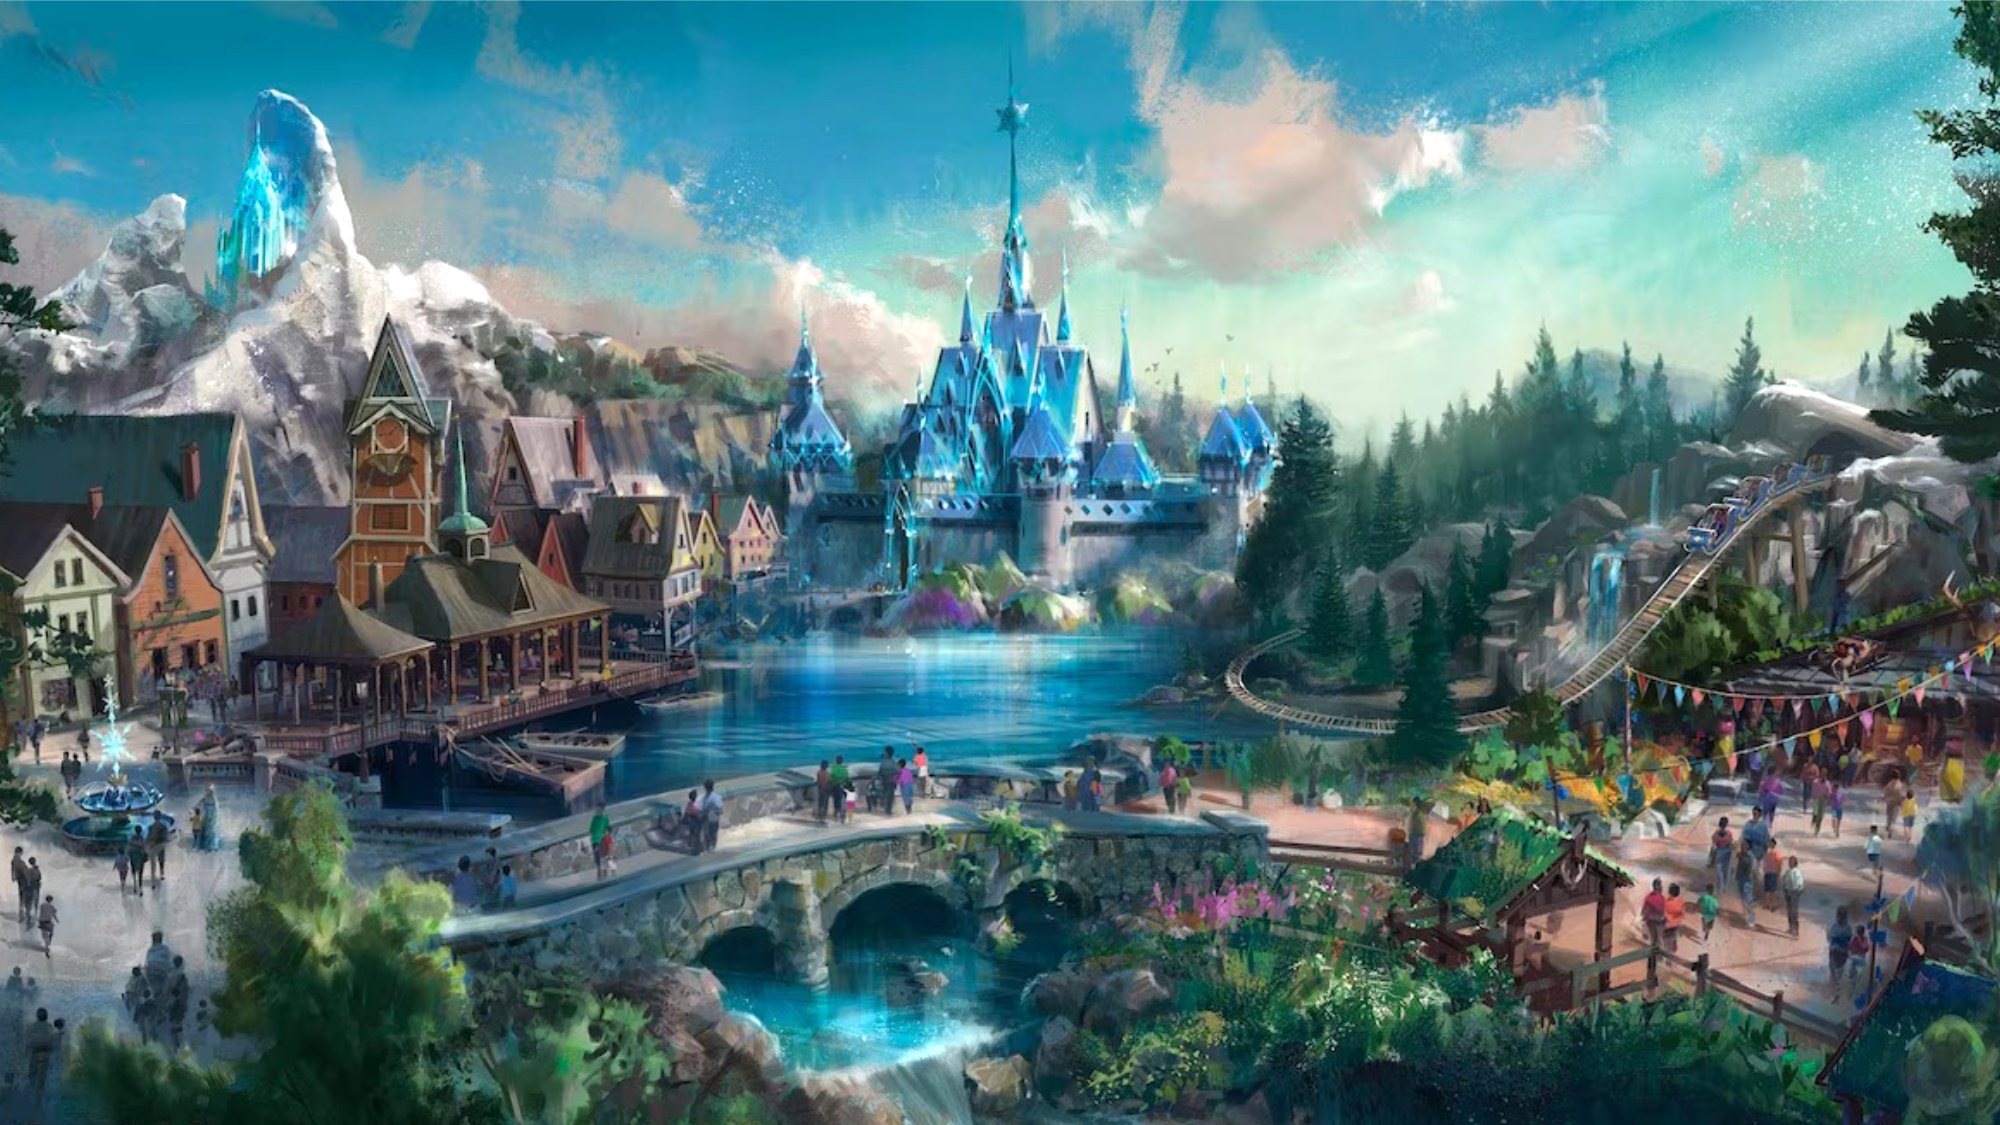 World of Frozen: Arendelle llega a los parques Disney